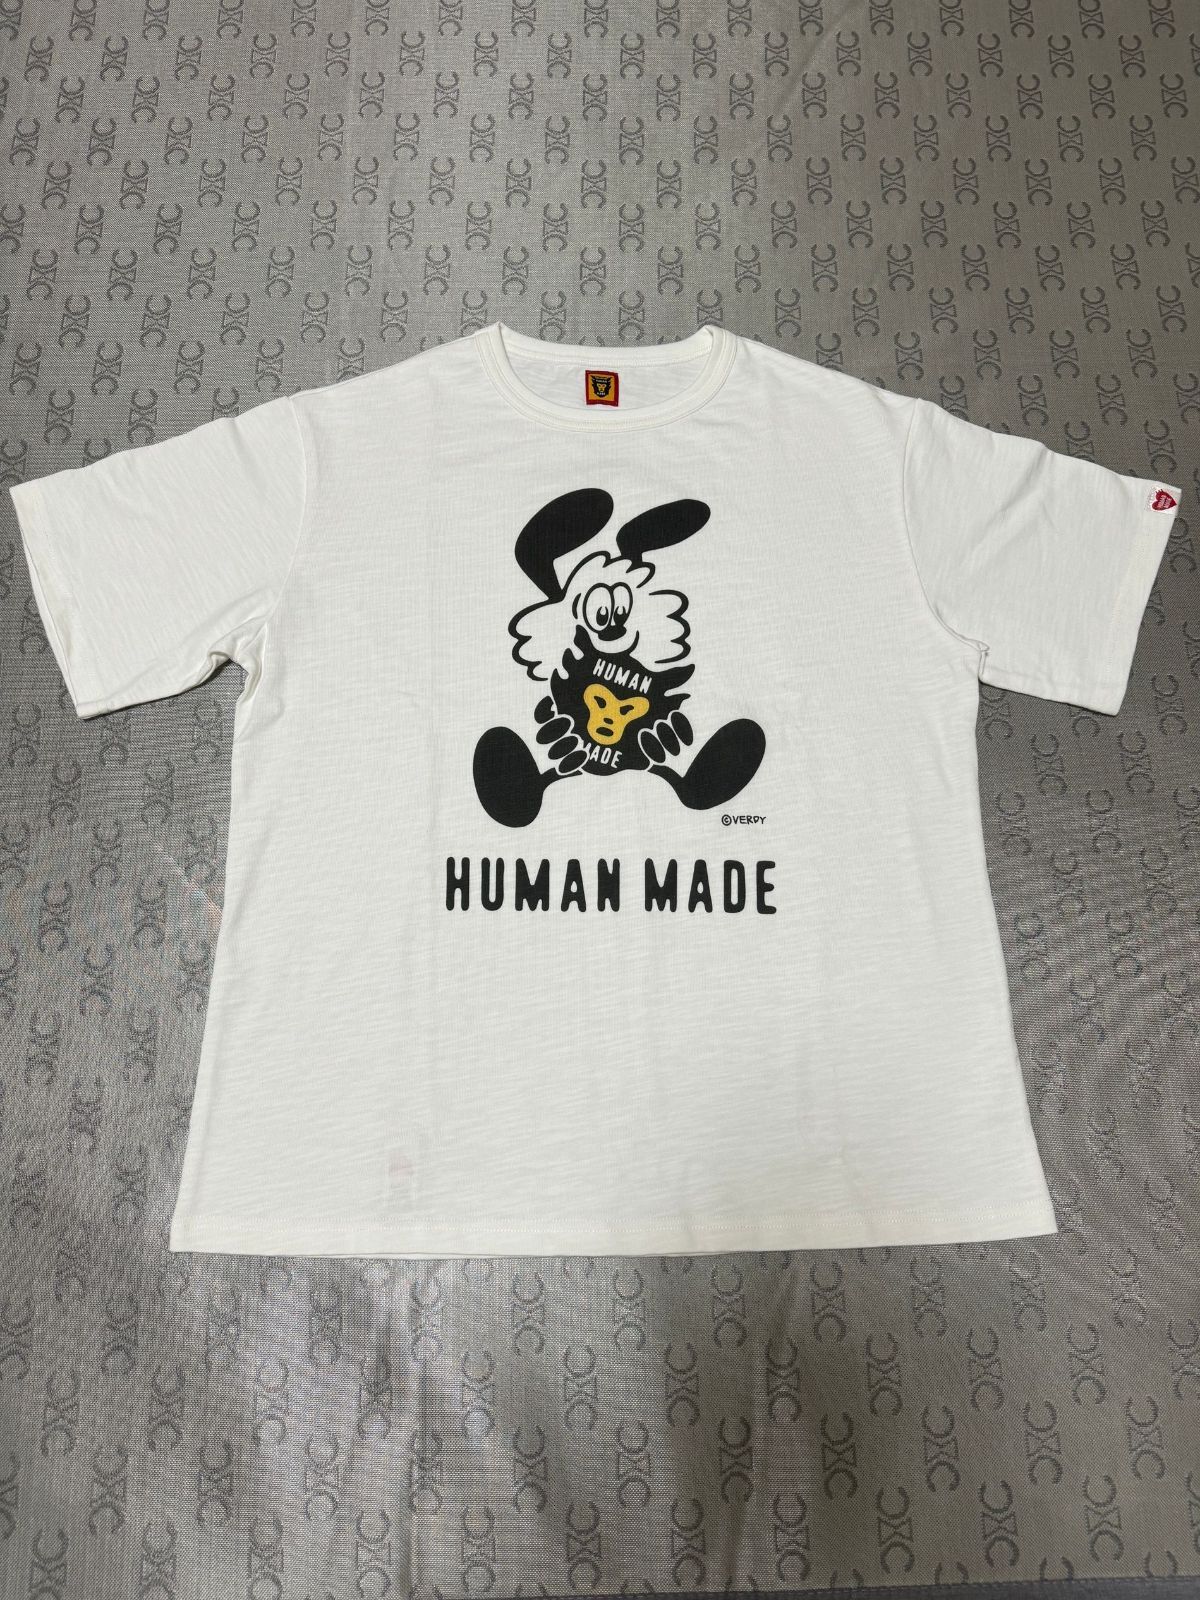 HUMAN MADE (ヒューマンメイド) x VERDY COMPLEX CON HK VICK T-SHIRT ...